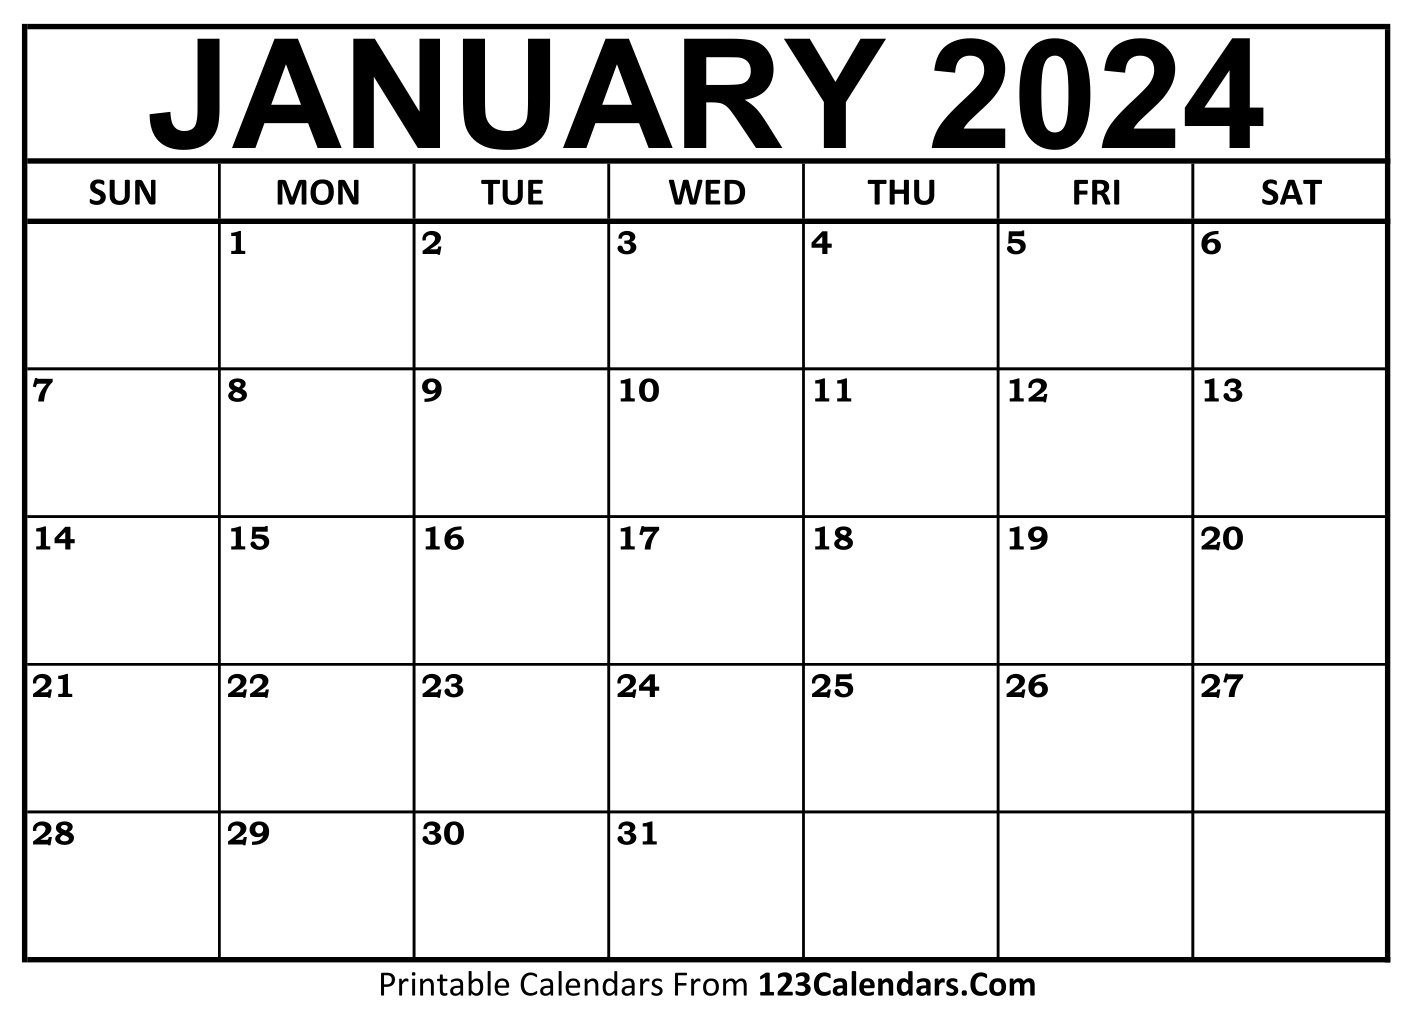 Printable January 2024 Calendar Templates - 123Calendars | Printable Calendar 2024 Free Template